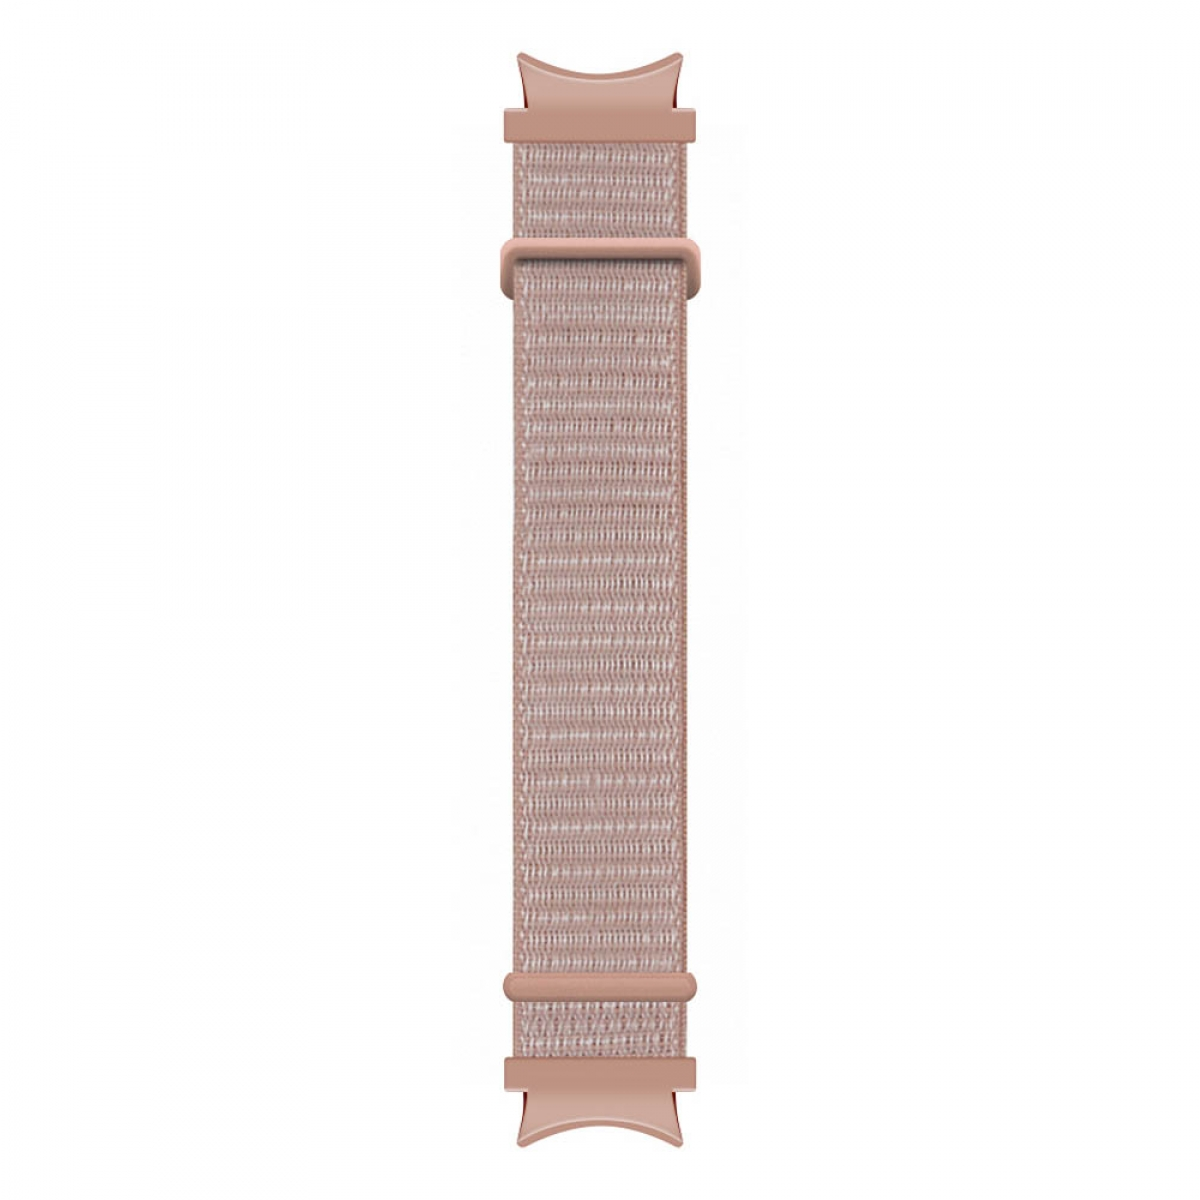 5 Nylon Samsung, (44mm), No-Gap, CASEONLINE Galaxy Watch Smartband, Sand Pink